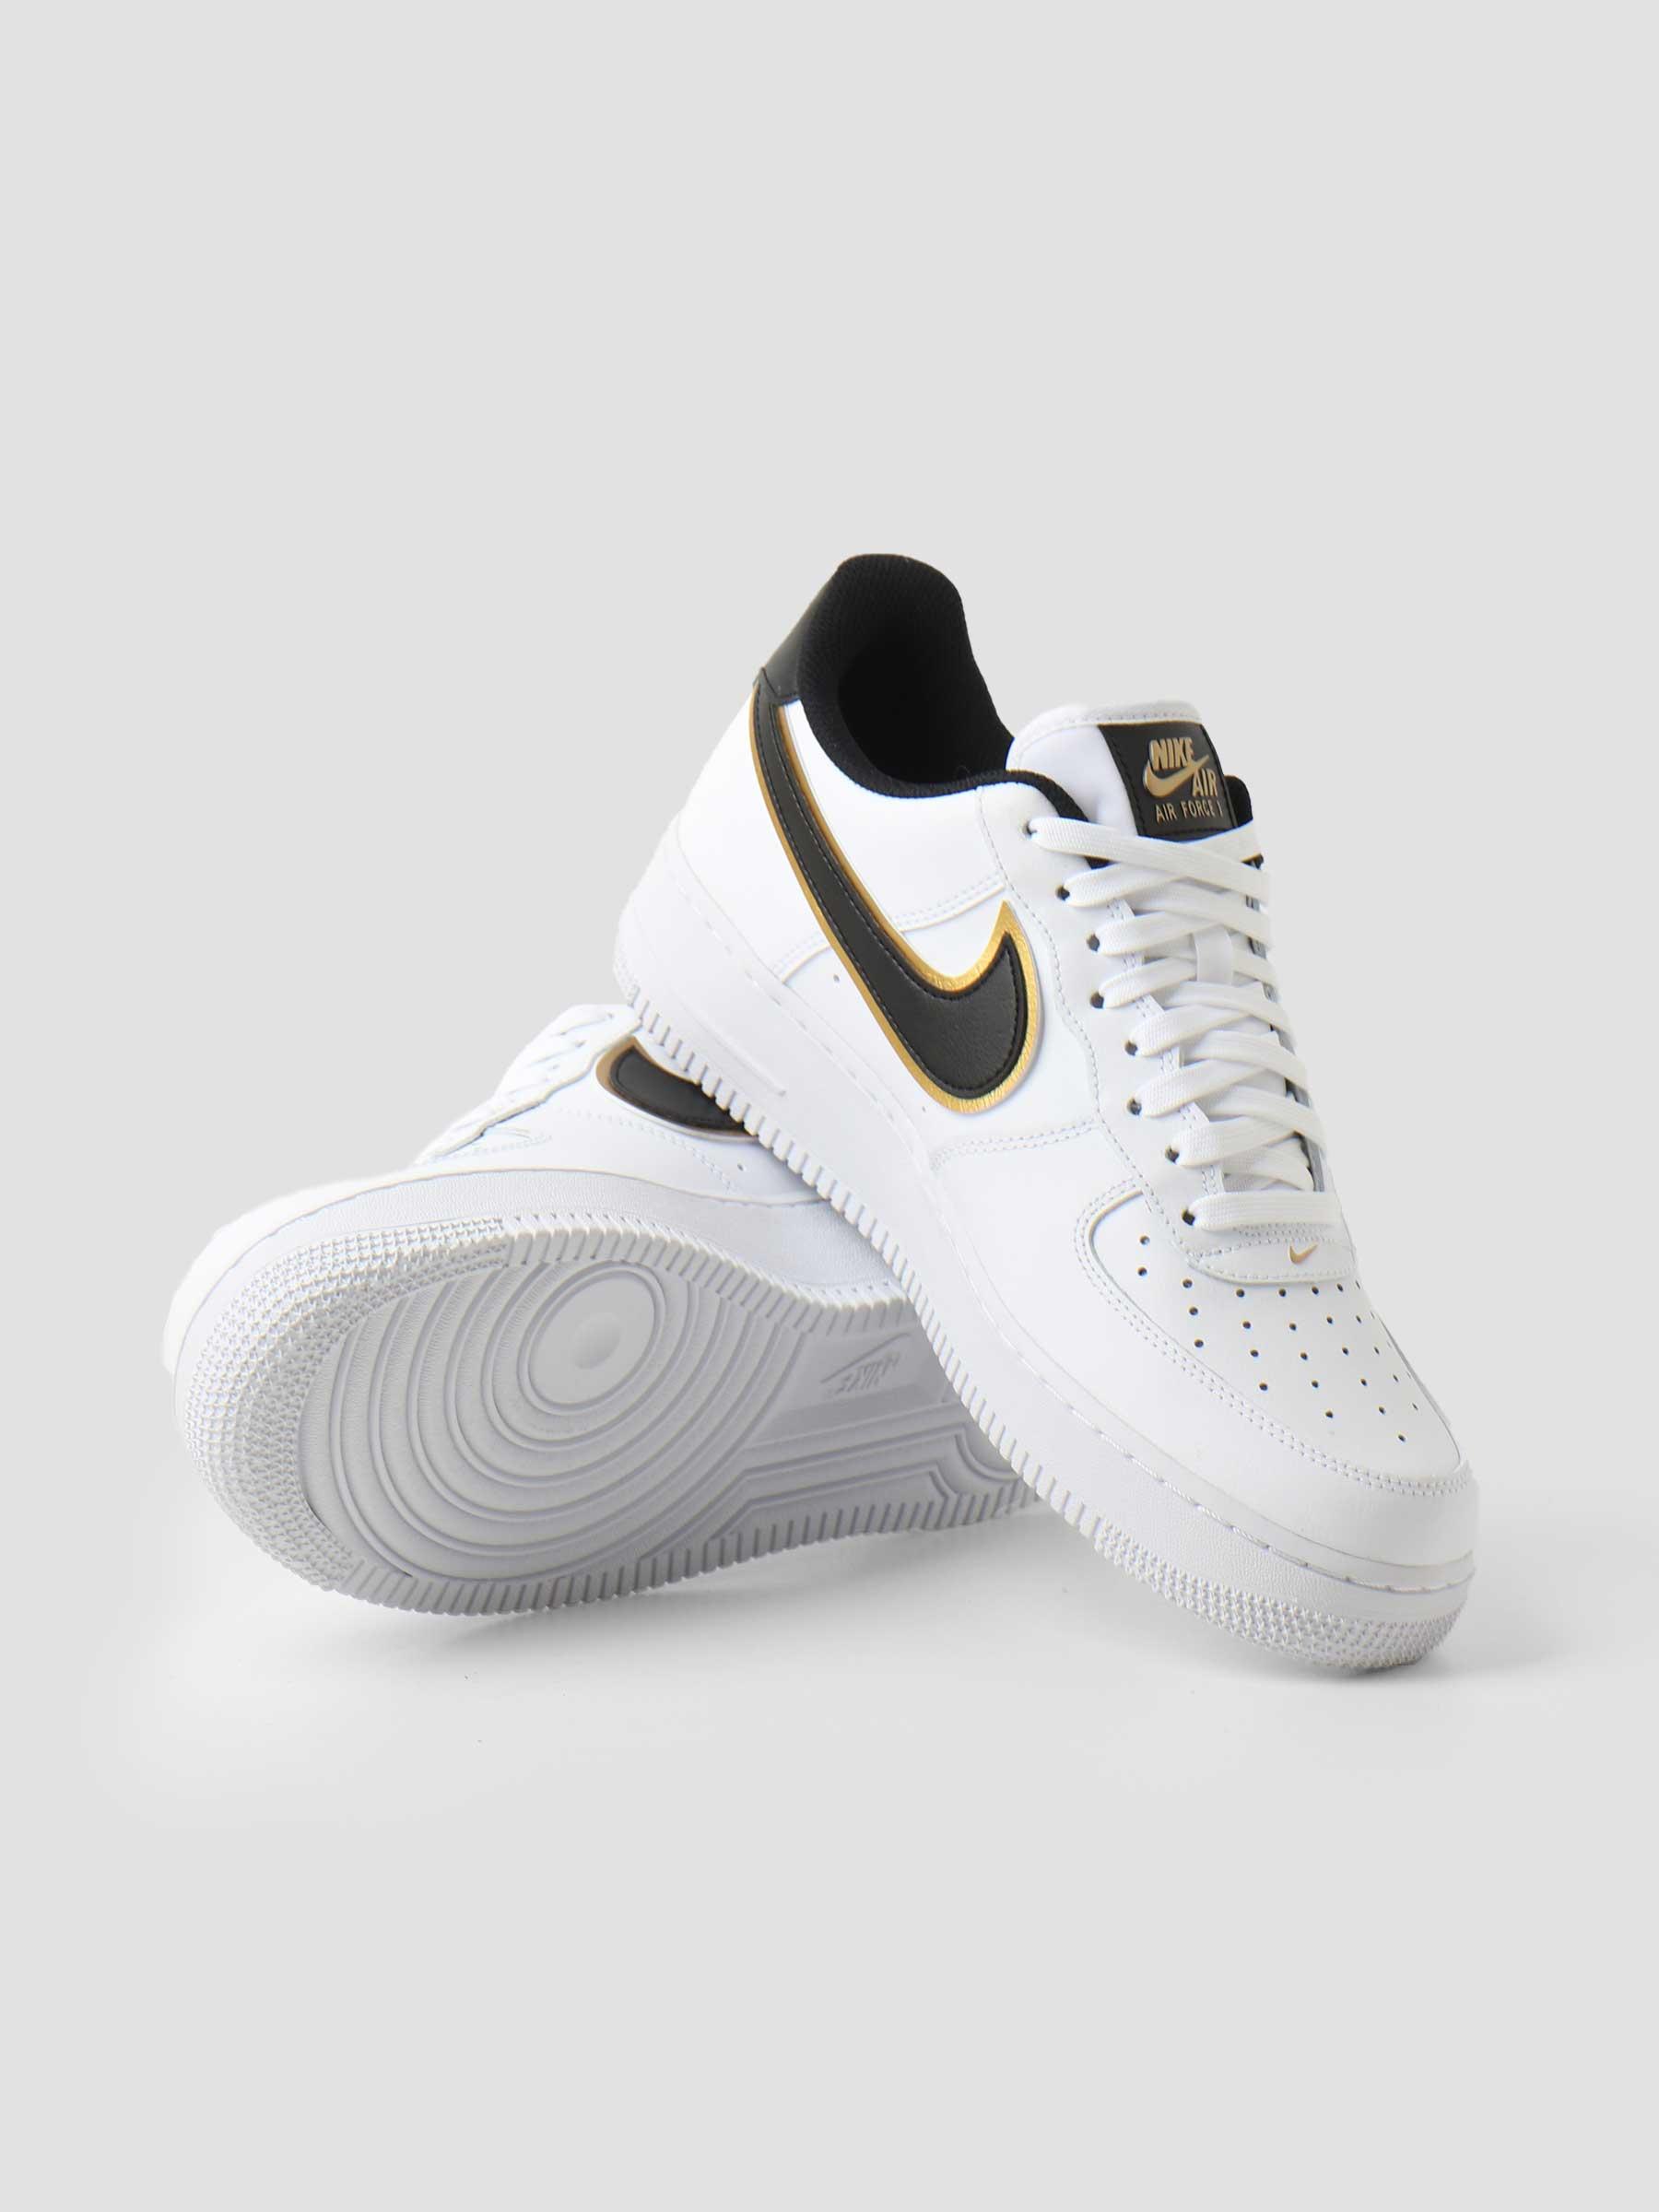 Nike Air Force 1 LV8 Black Metallic Gold Sneakers DA8481 001 Men size